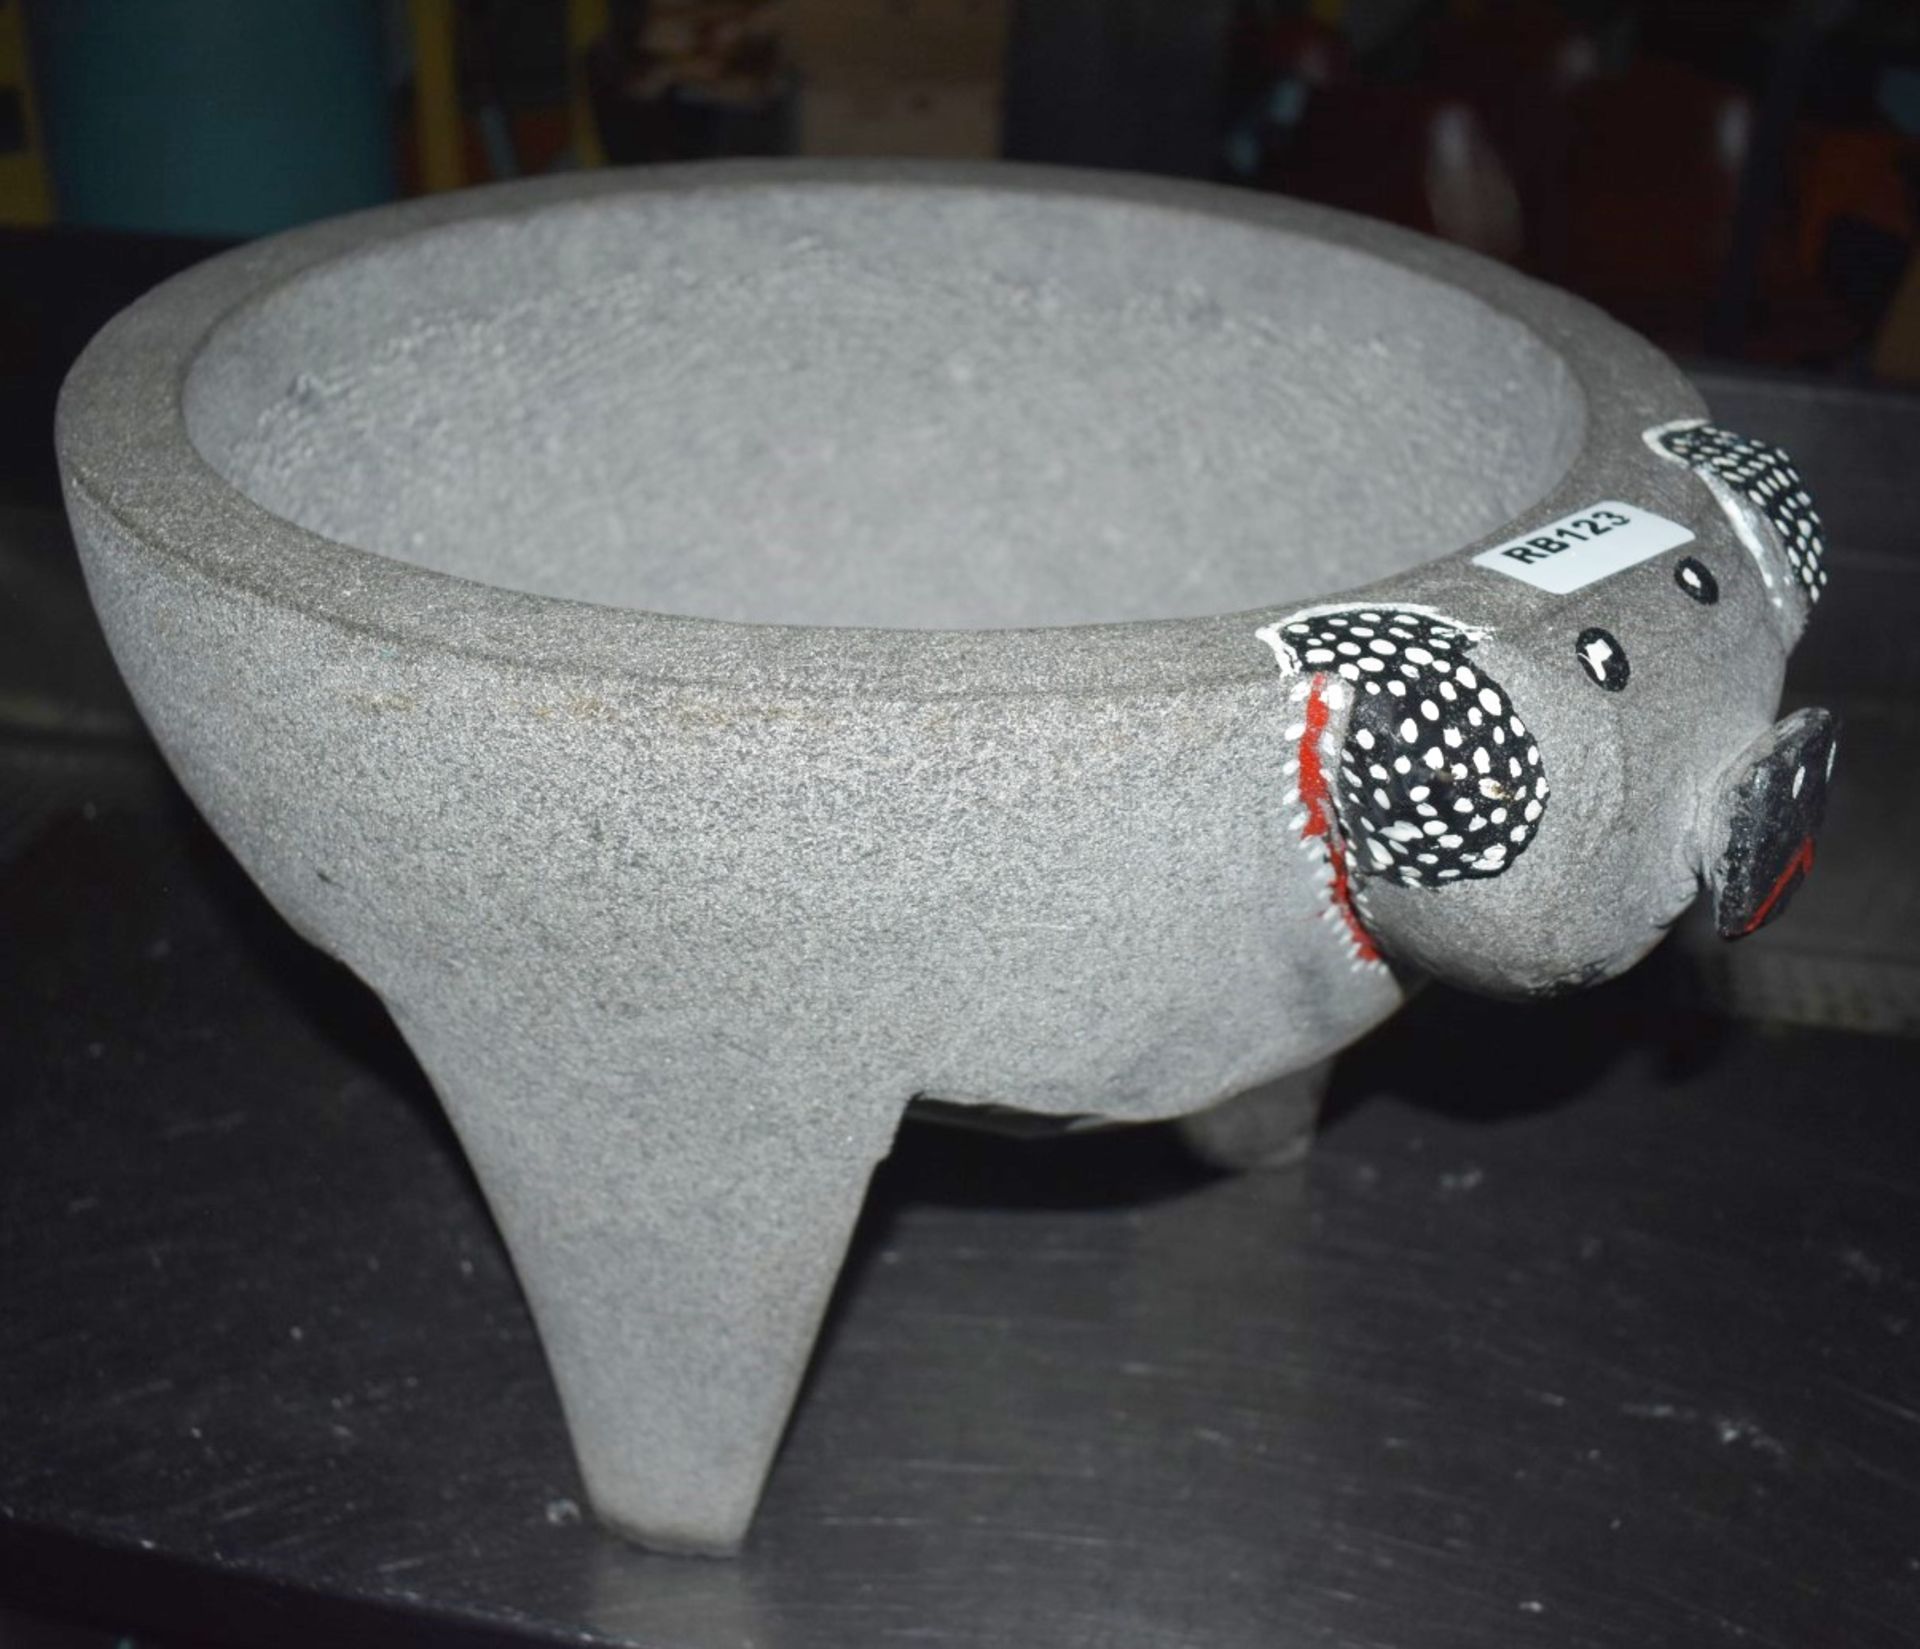 1 x Stone Pig Style Dahaca Folk Art Griding Bowl - Size H30 x W40 cms - Ref: RB123 - CL558 - - Image 2 of 4